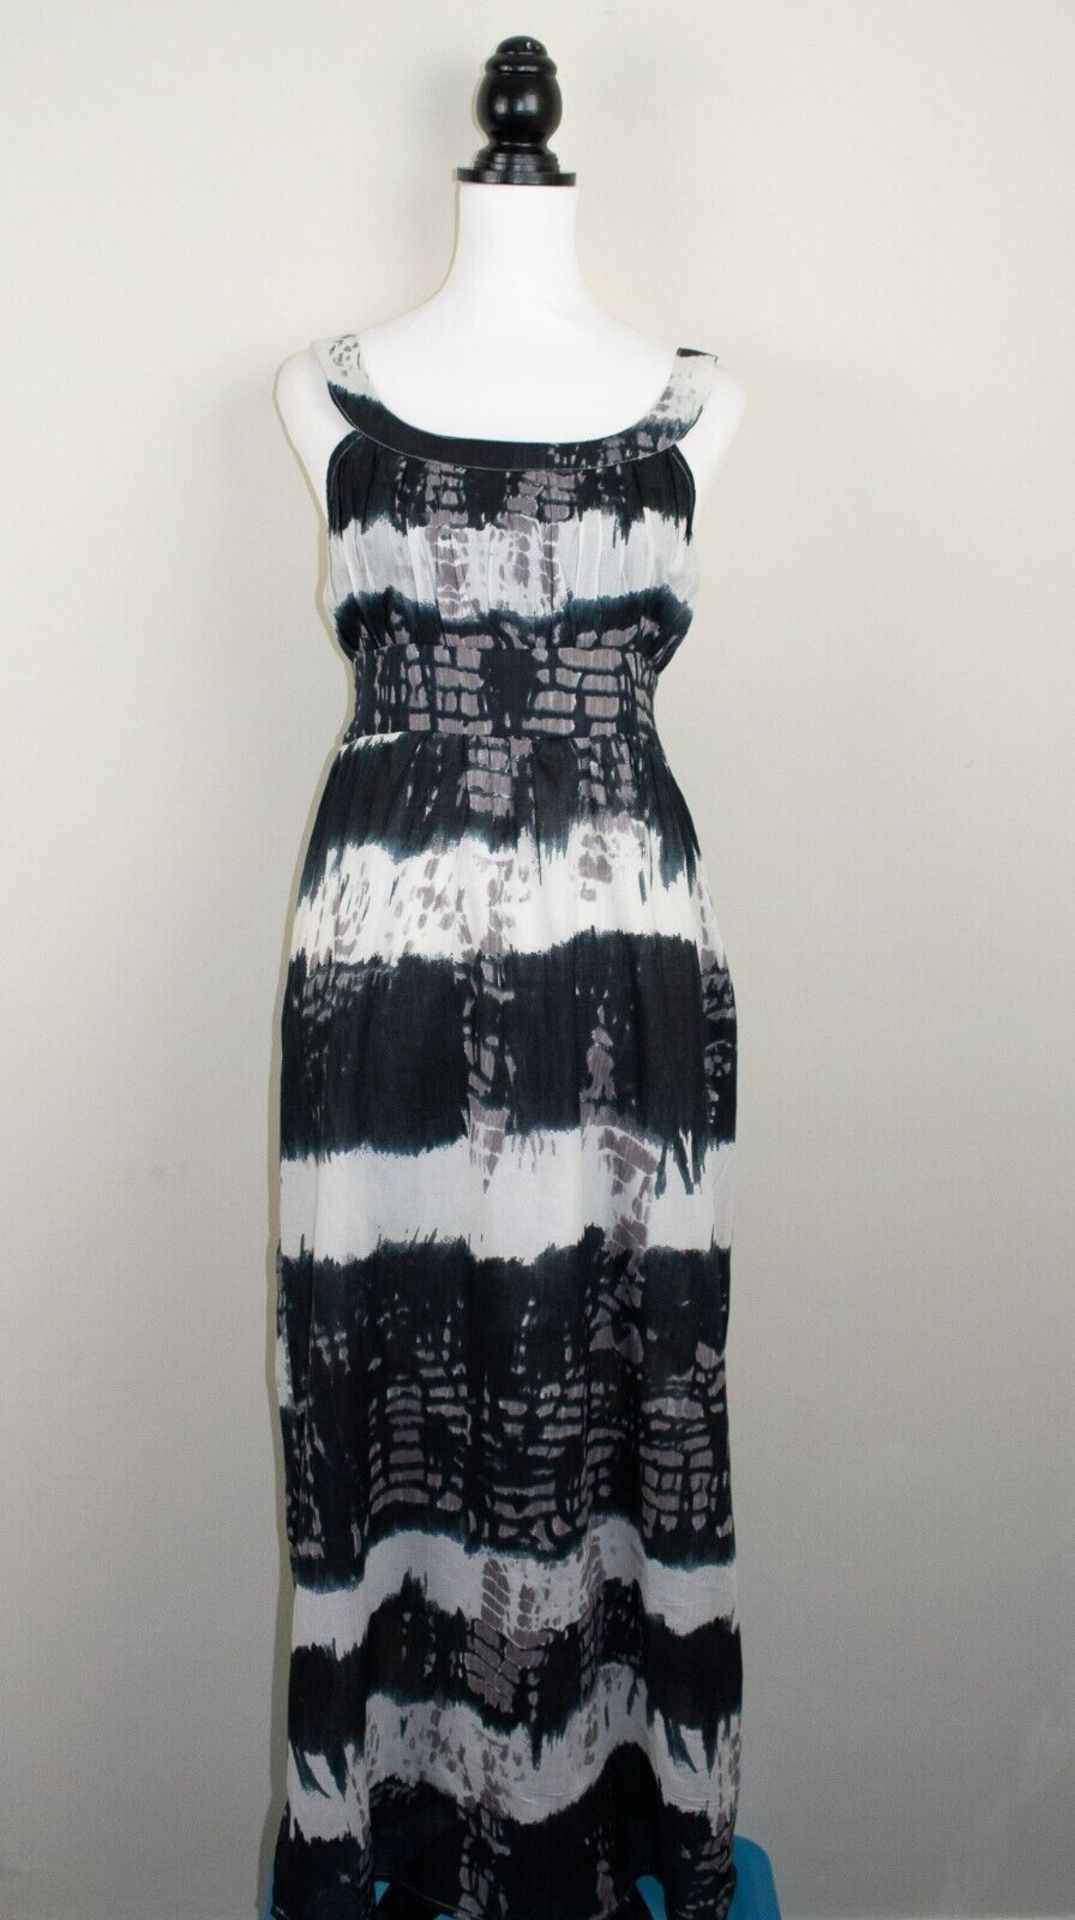 20 x New Women's Maxi & Midi Dresses Clothing Ladieswear Fashion Boho Spring / Summer Styles - Image 3 of 11